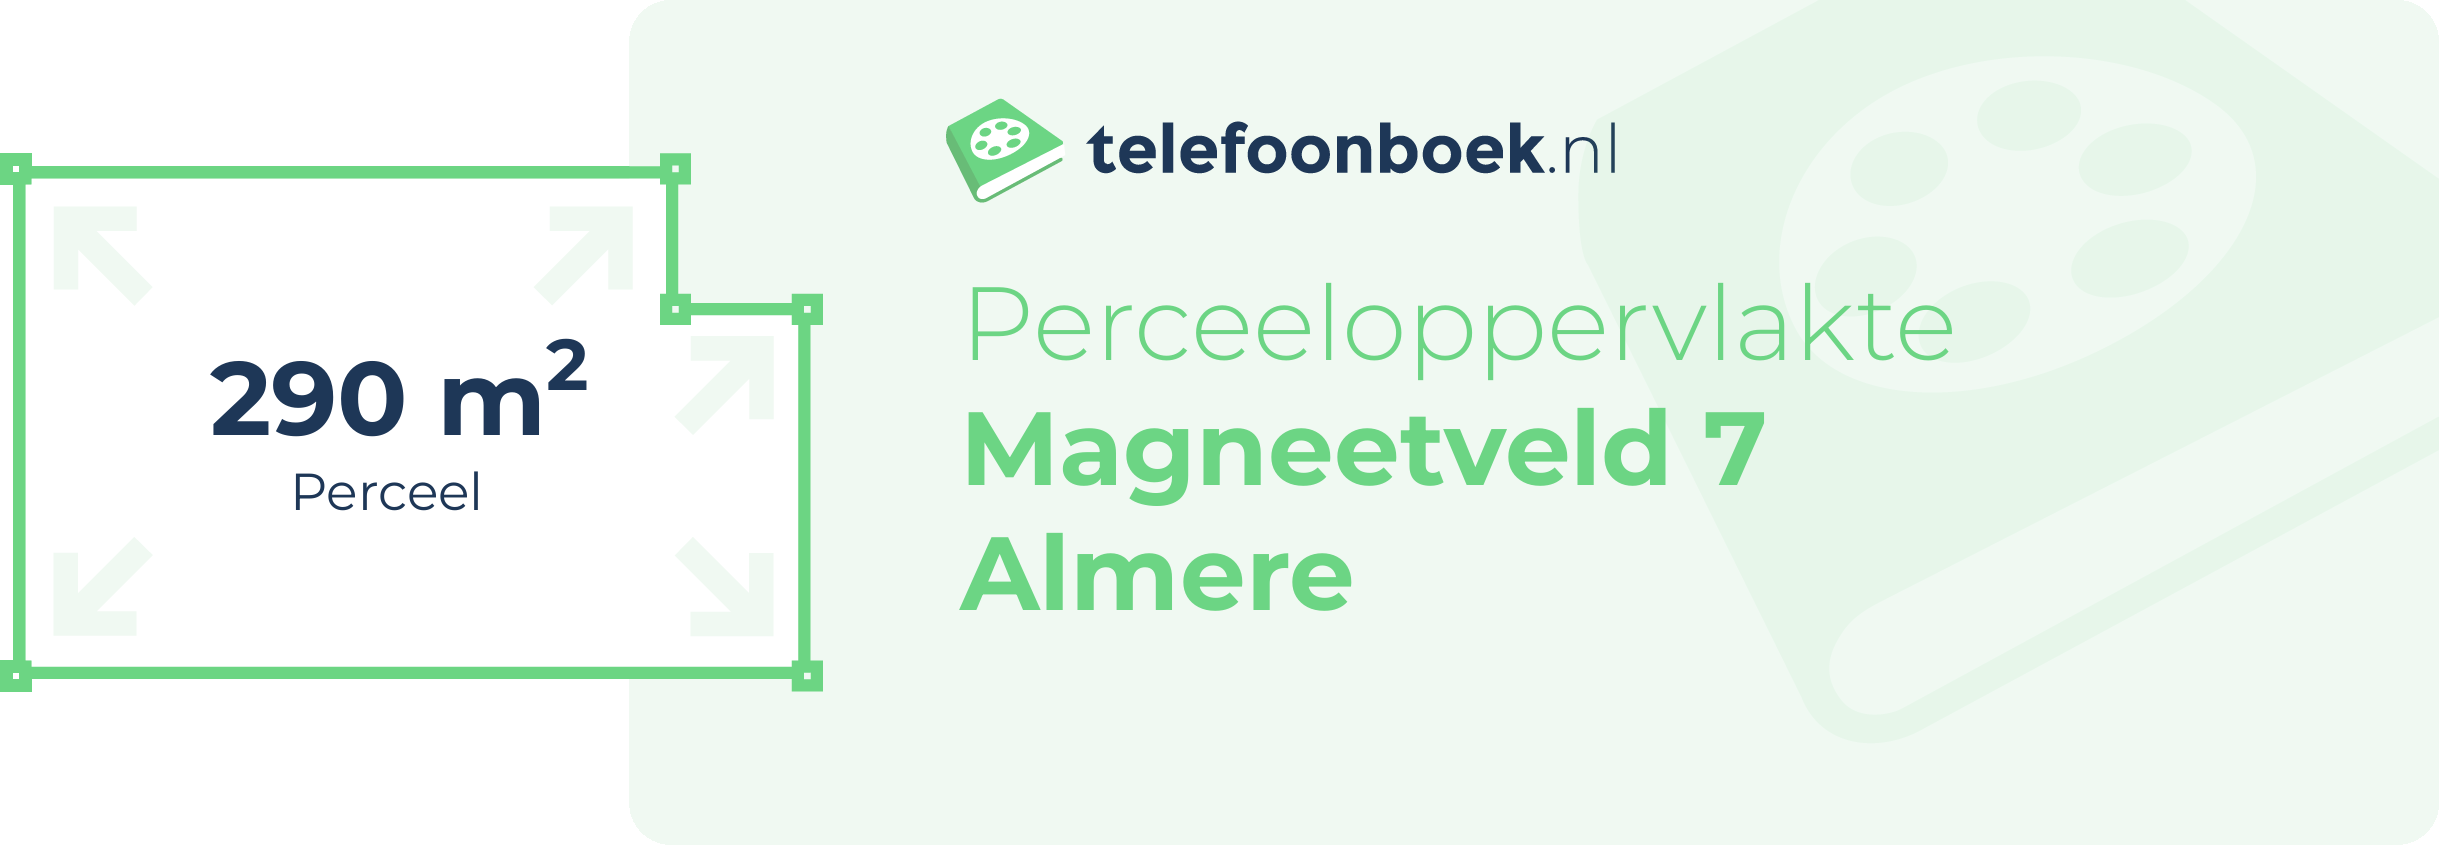 Perceeloppervlakte Magneetveld 7 Almere